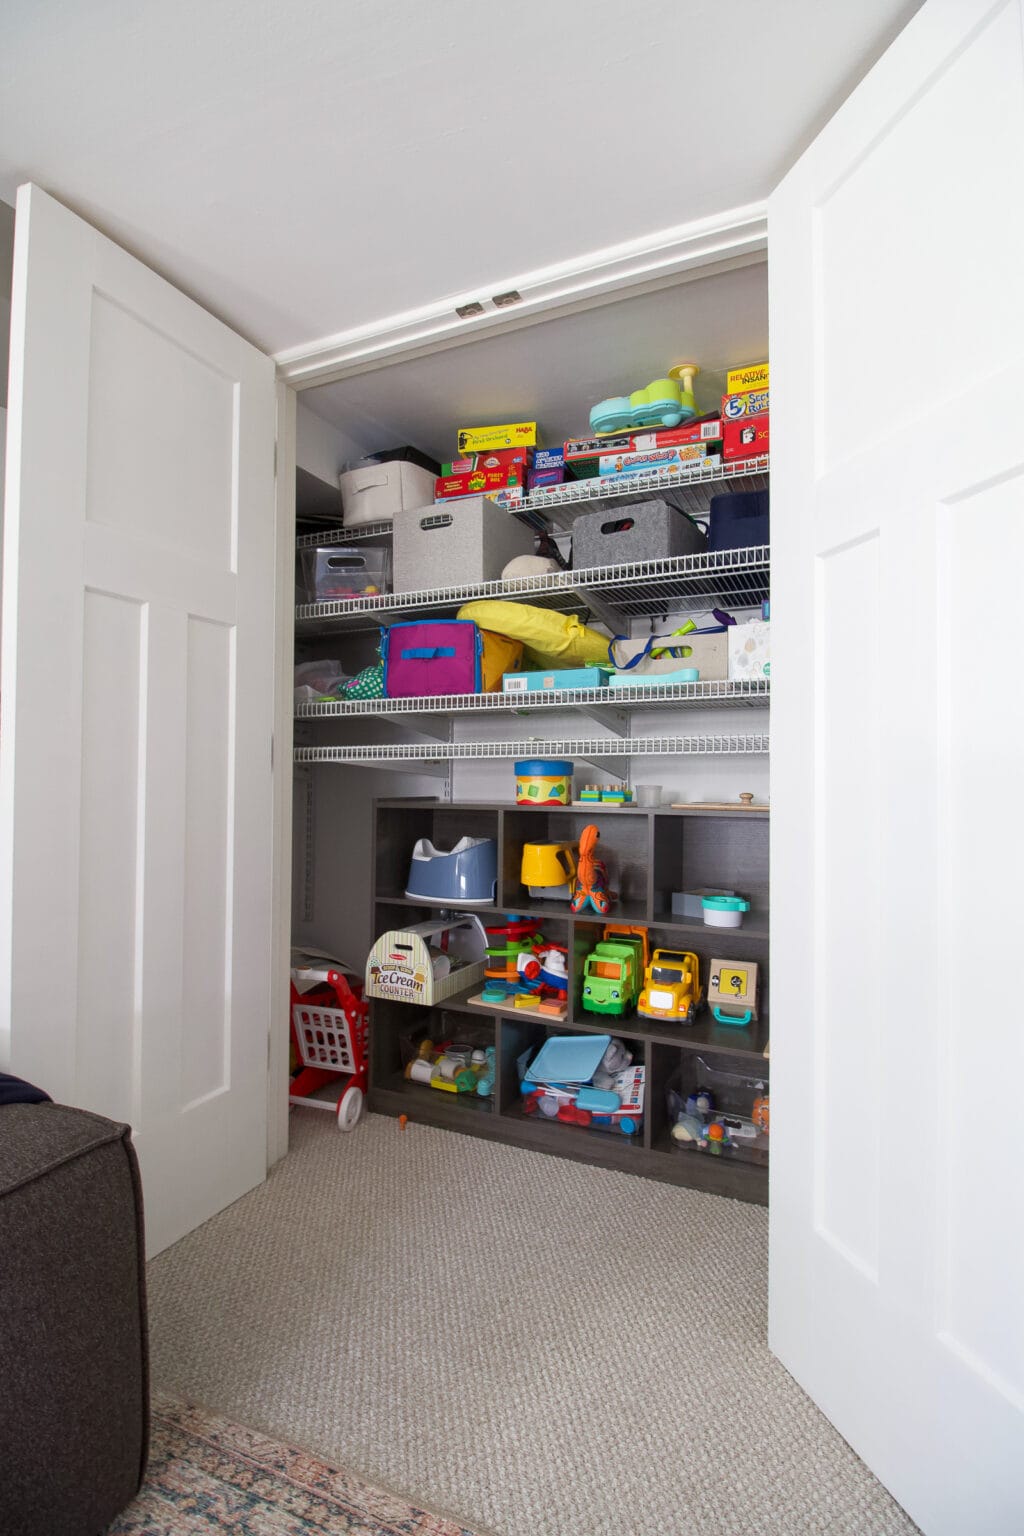 The playroom closet space needs some organization